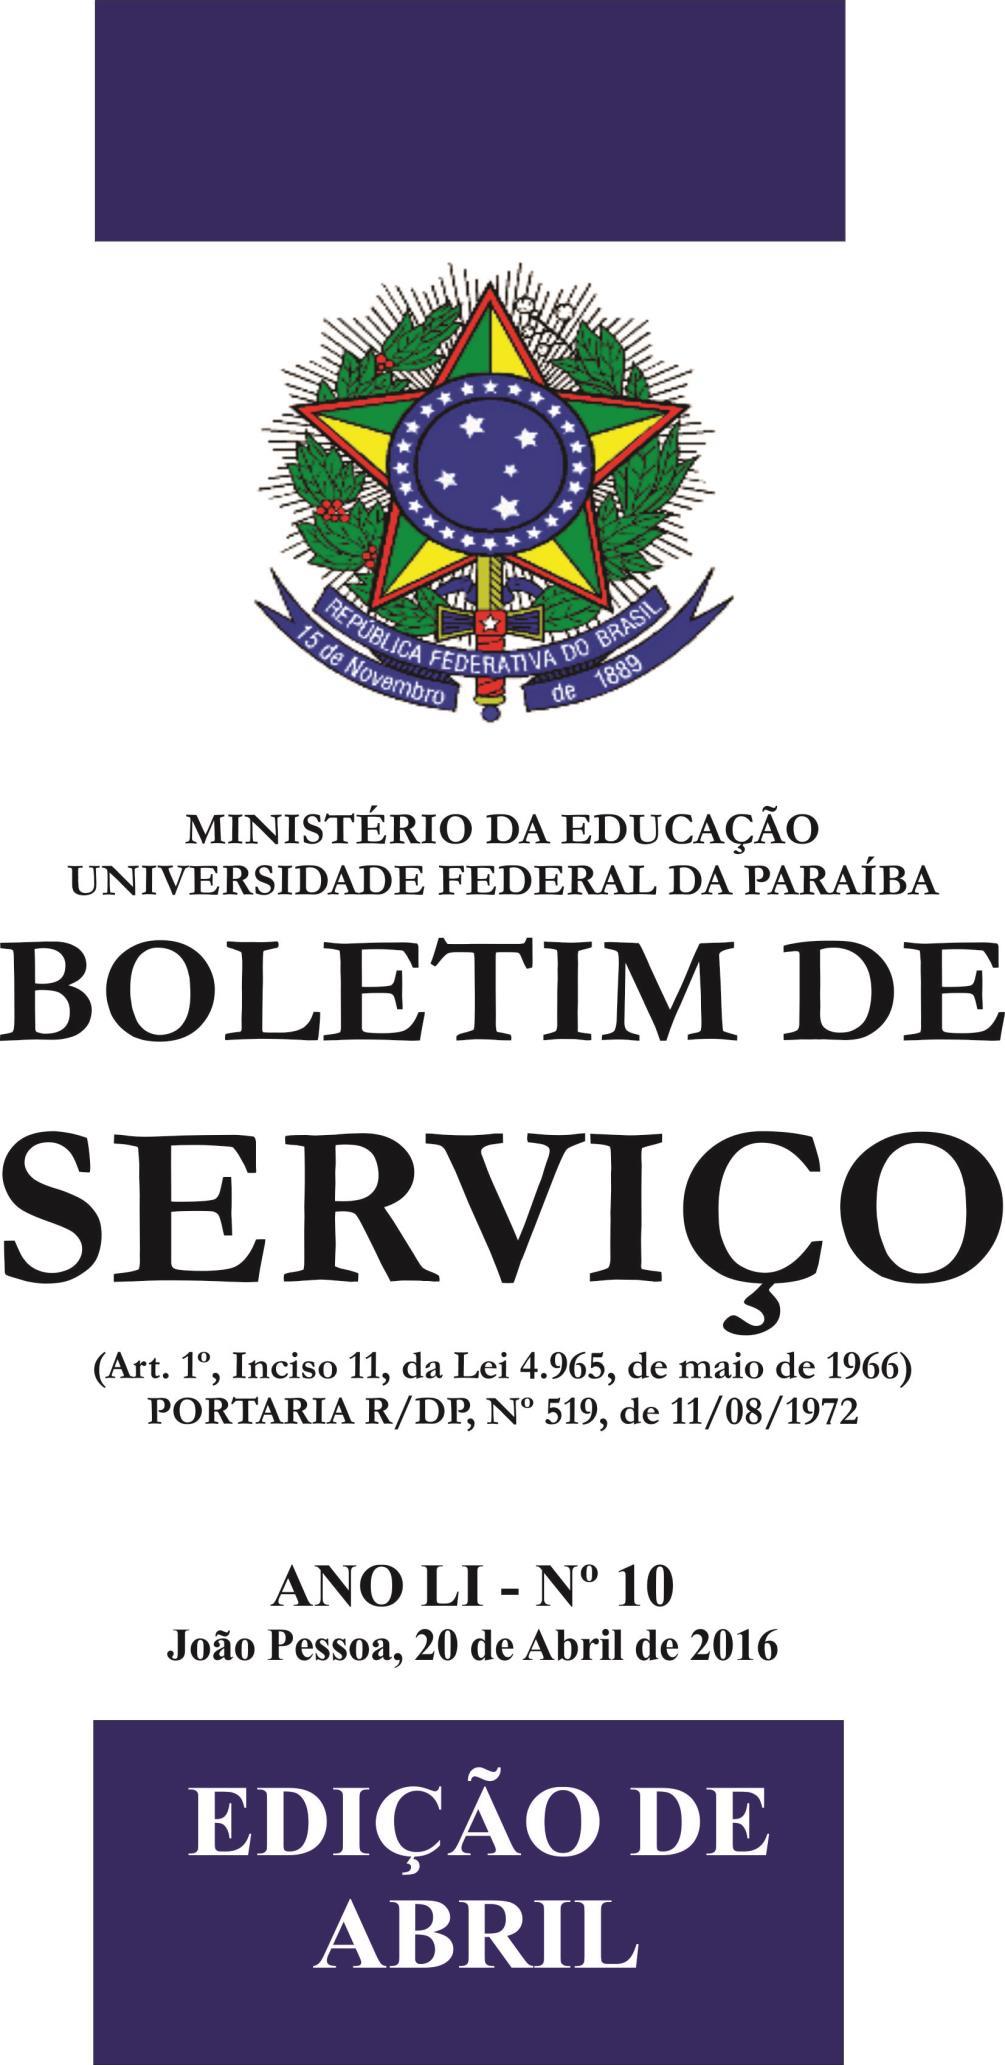 03/08/2017 BOLETIM DE SERVIÇO PÁGINA 1 ANO LII Nº